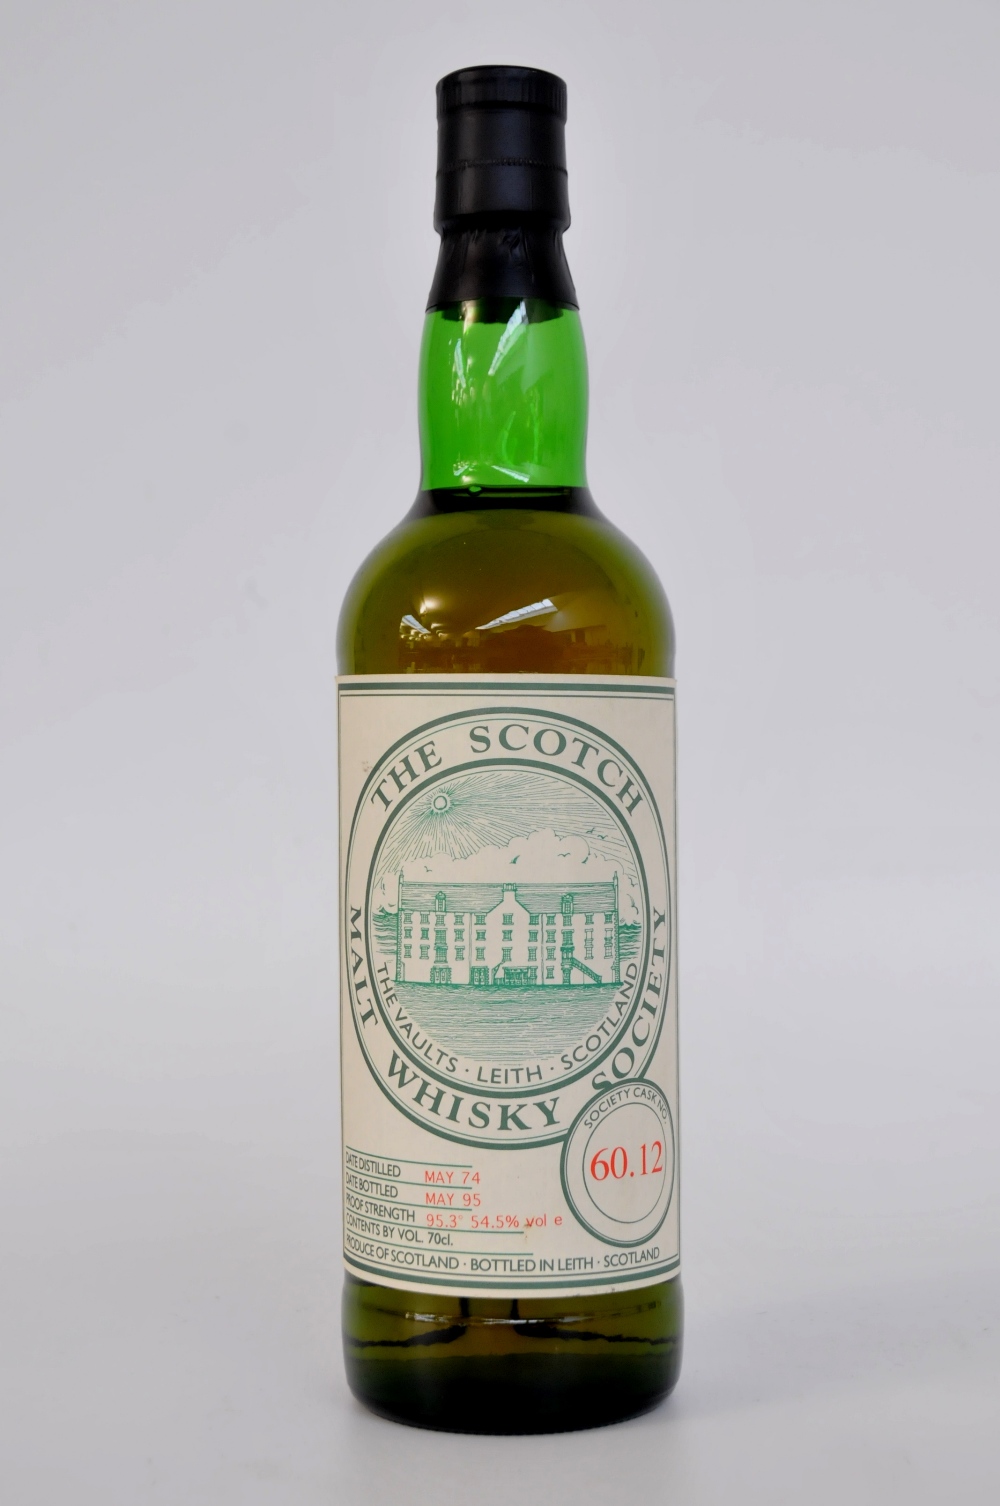 ABERFELDY 1974 SMWS 60.12
1 bottle Aberfeldy 1974-1995. SMWS 60.12. 70cl. 54.5%. Level at base of